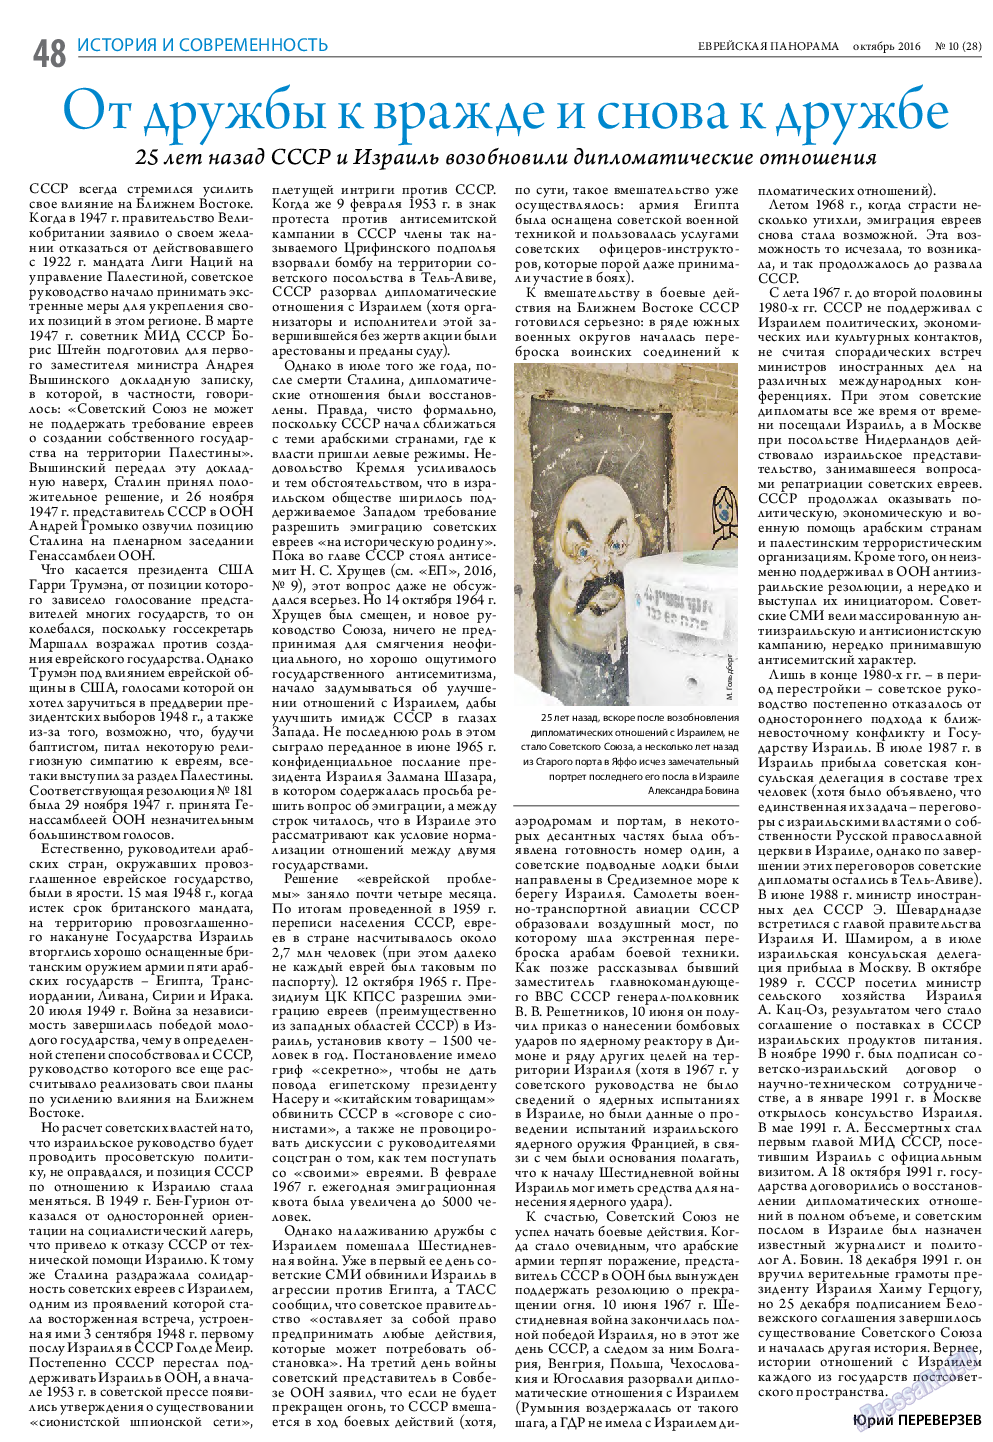 Еврейская панорама, газета. 2016 №10 стр.48